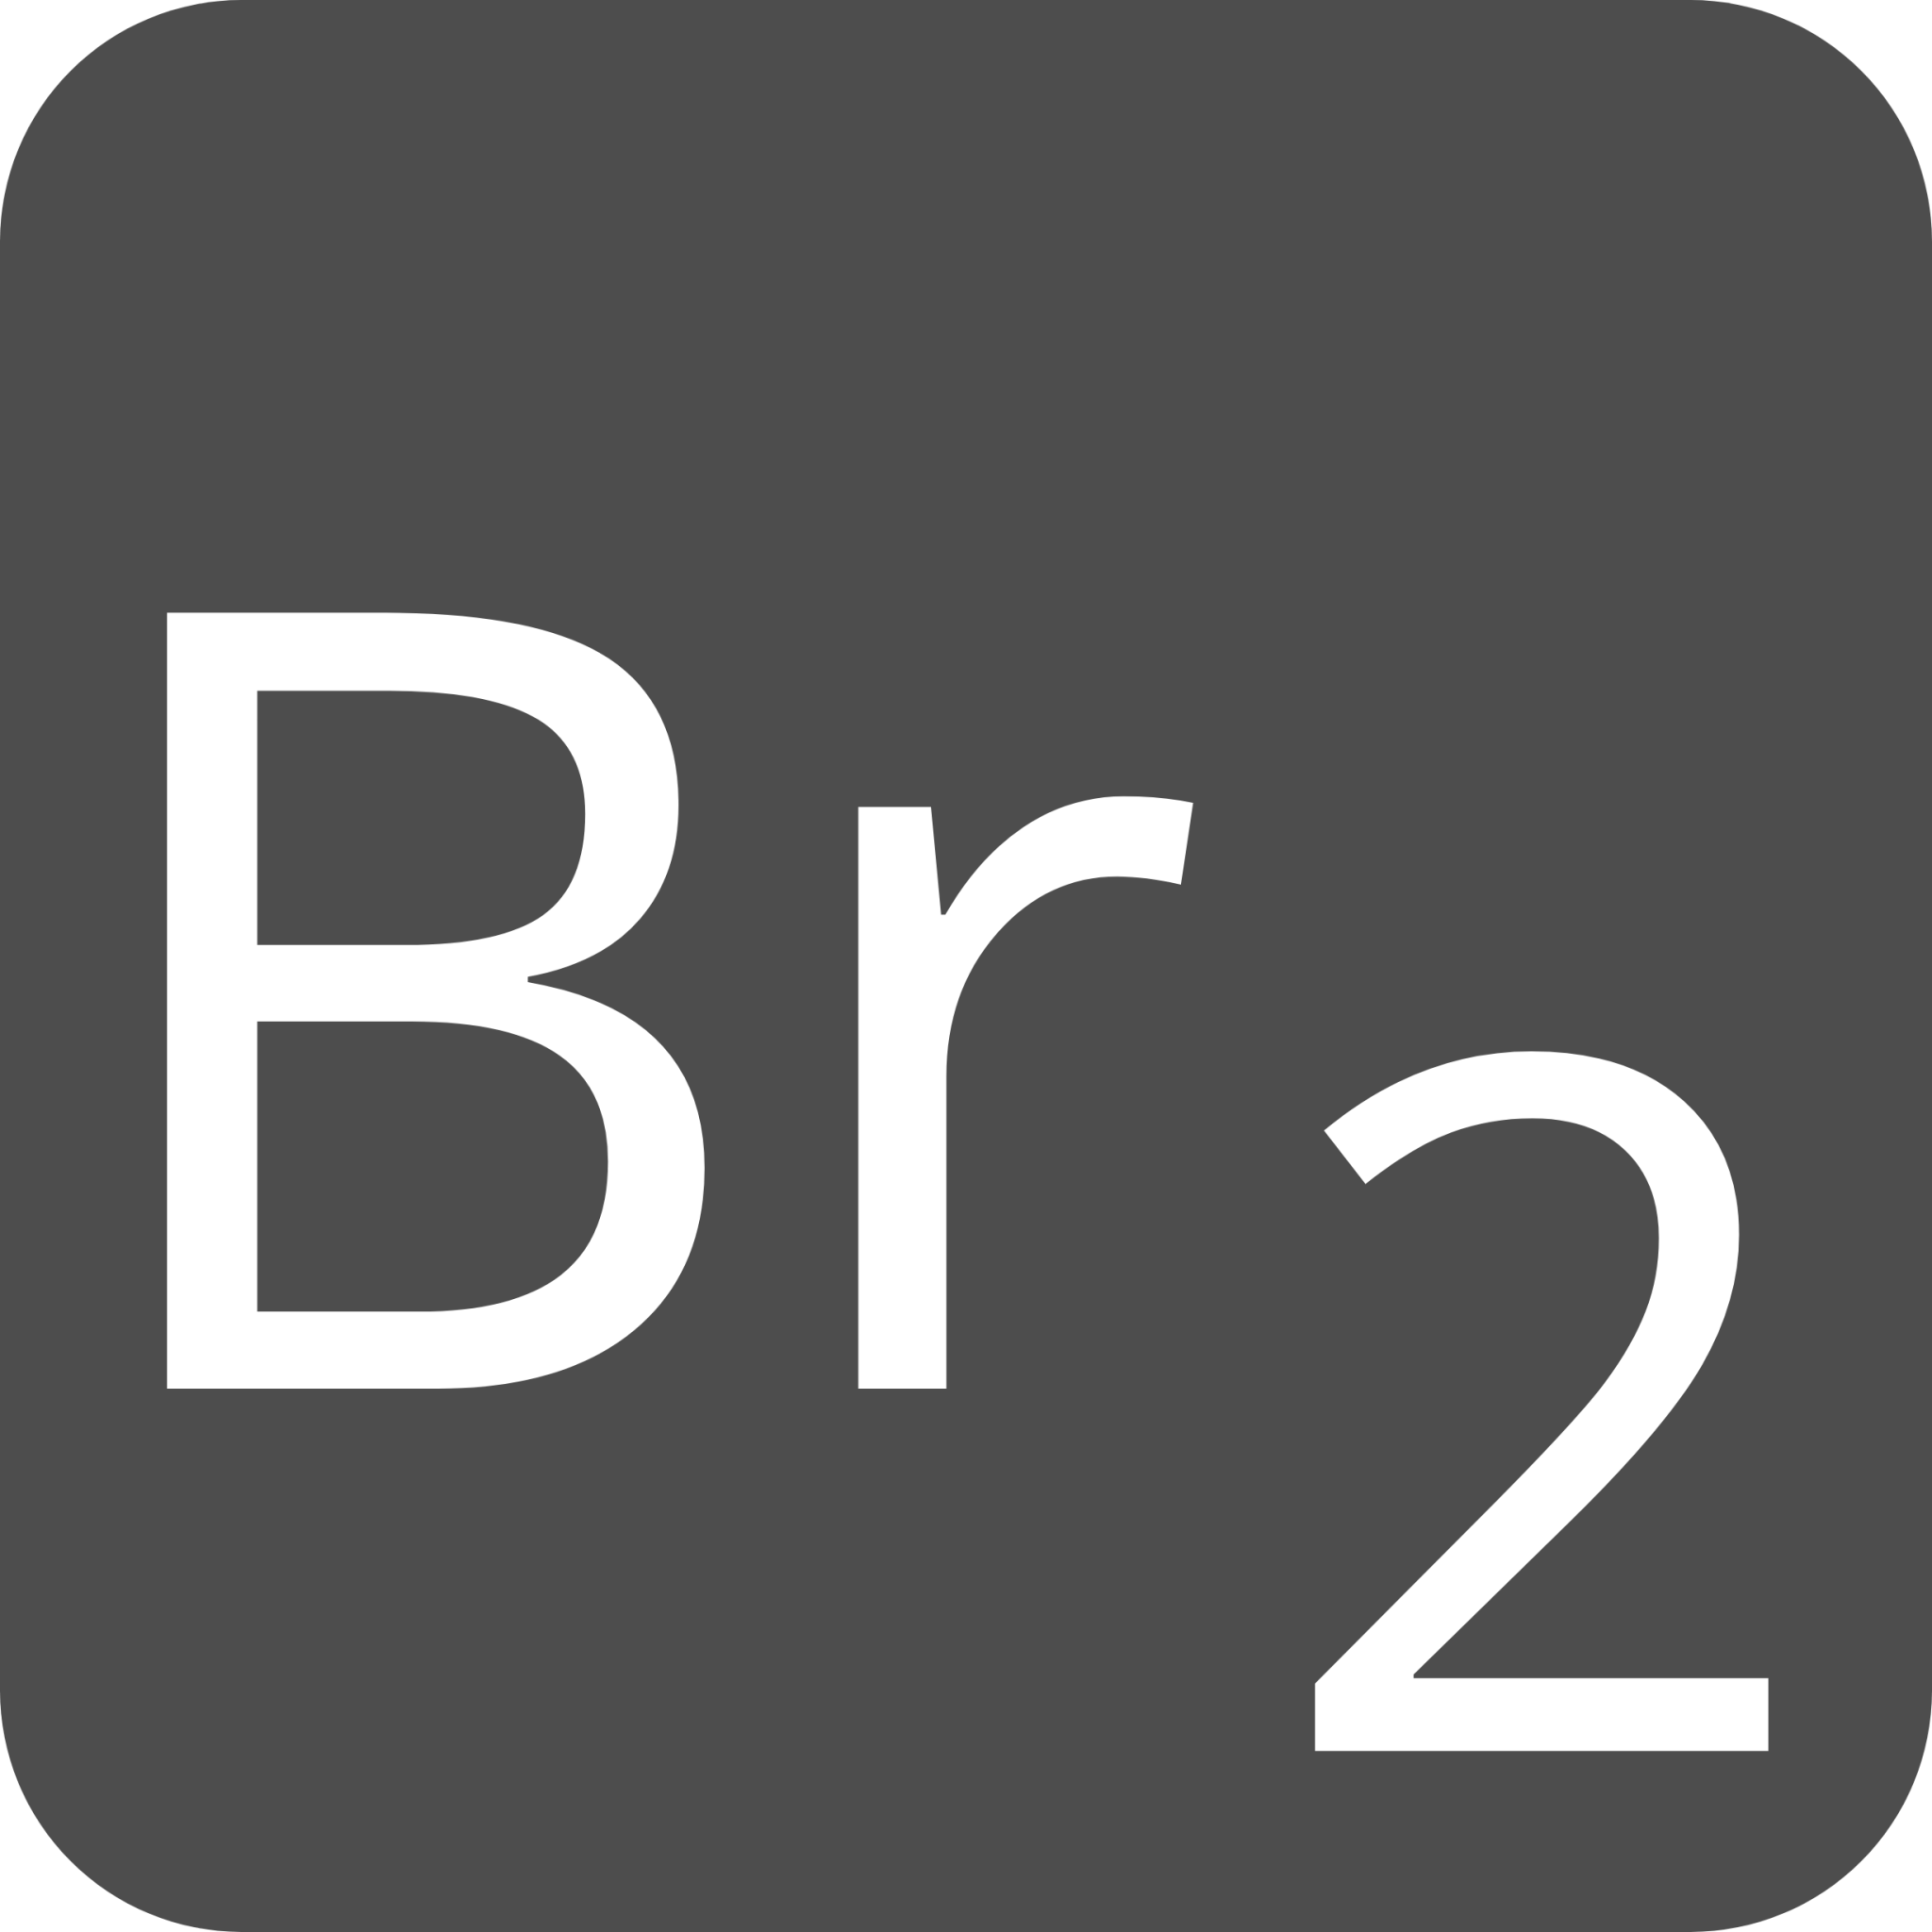 indicator keyboard Br 2 icon